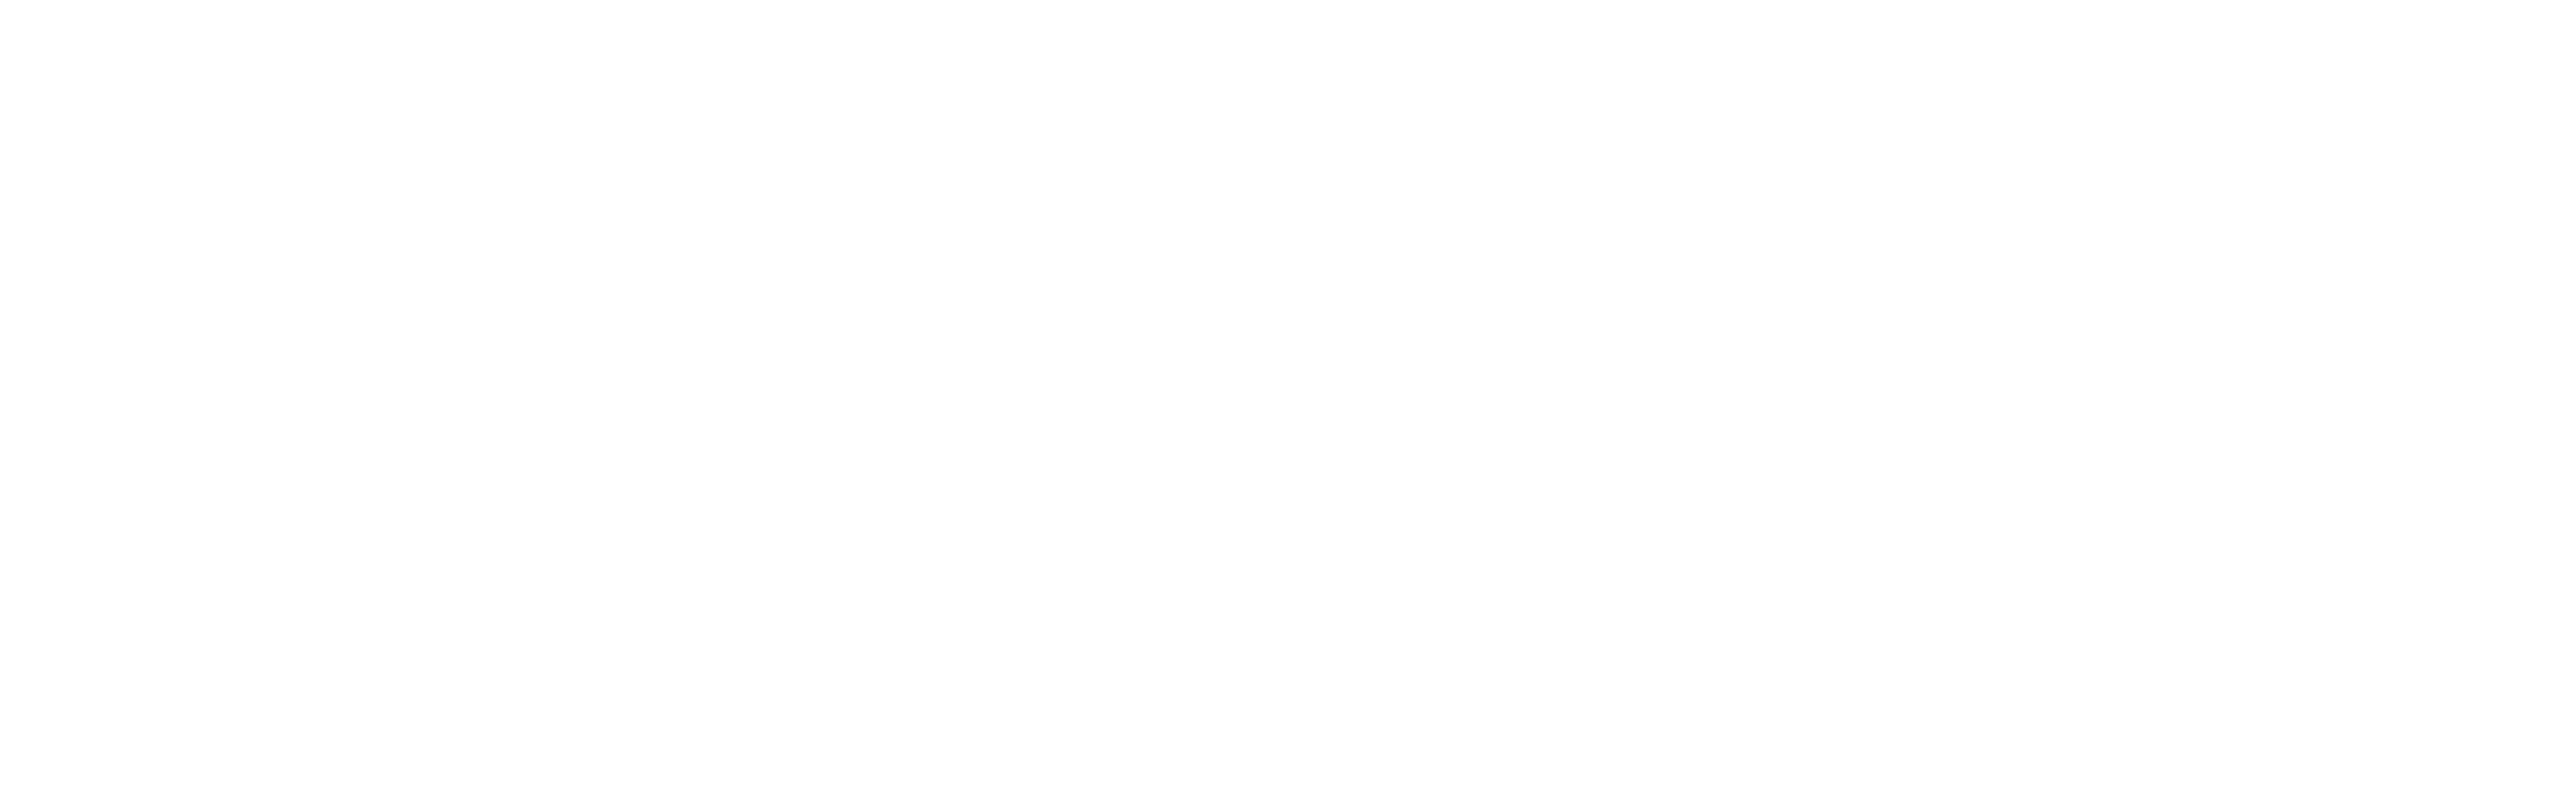 HLW Academy